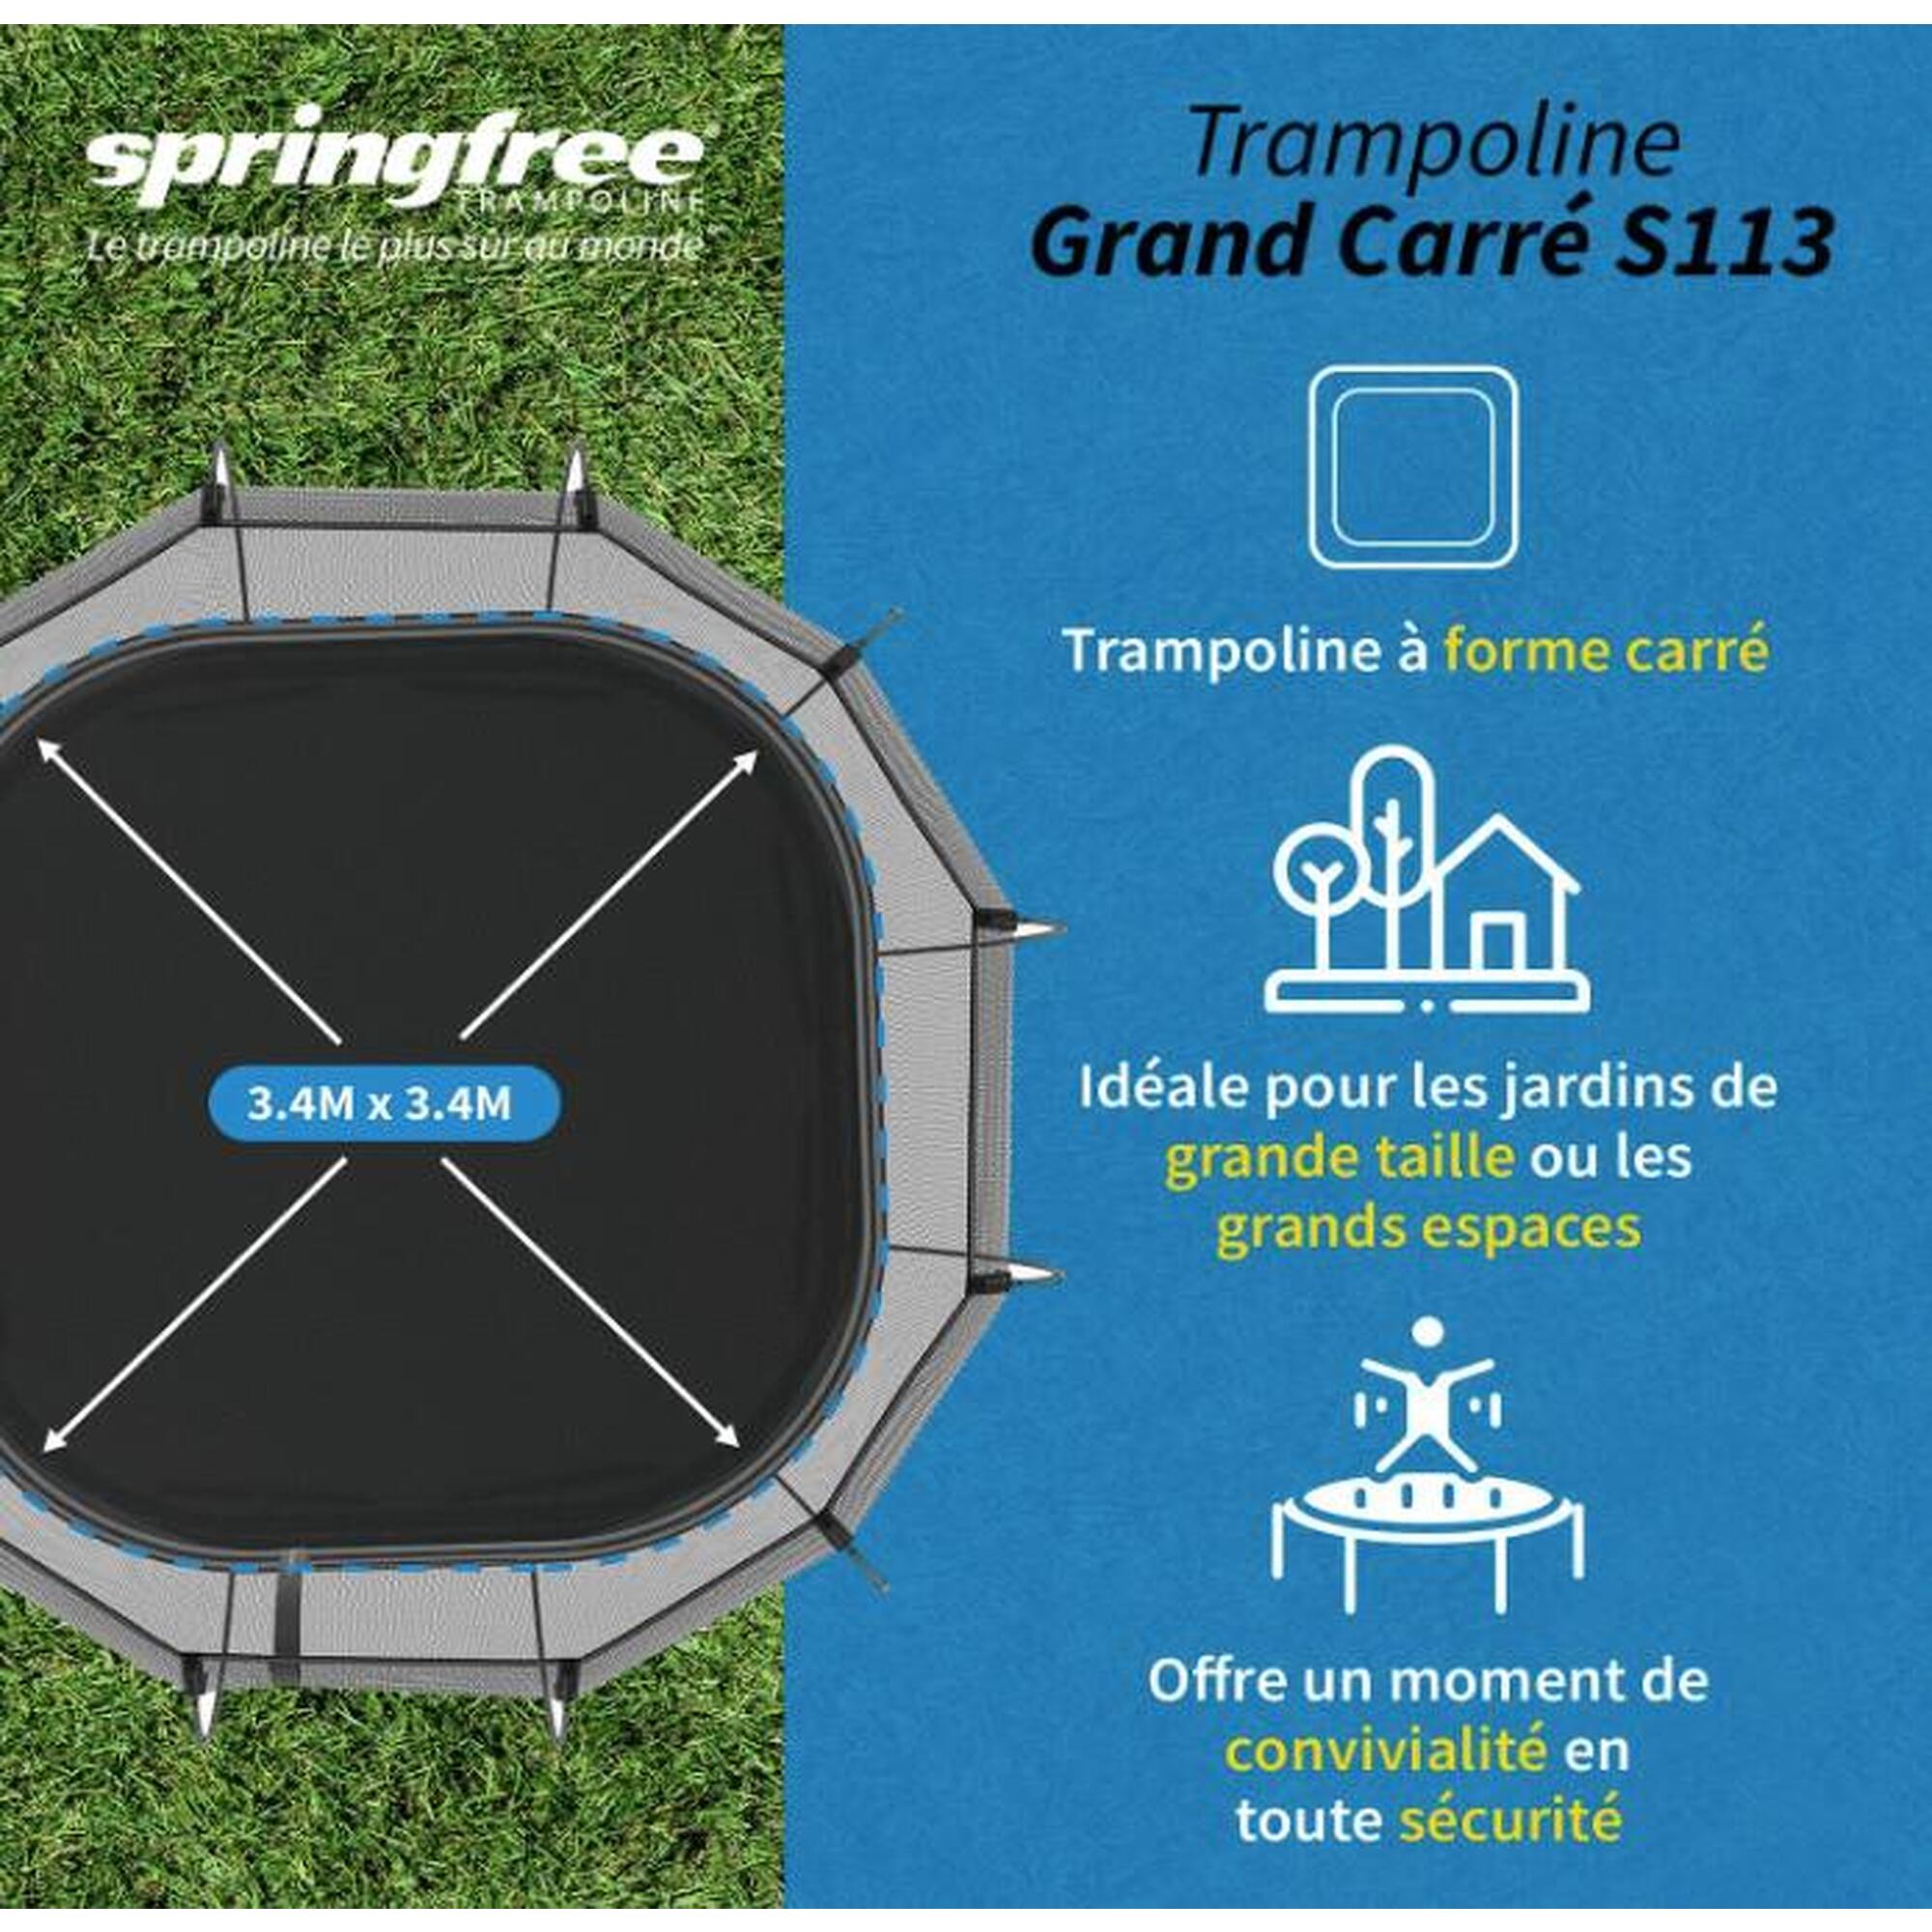 Springfree Trampoline S113 Grand Carré 3,4x3,4M - Pack Premium